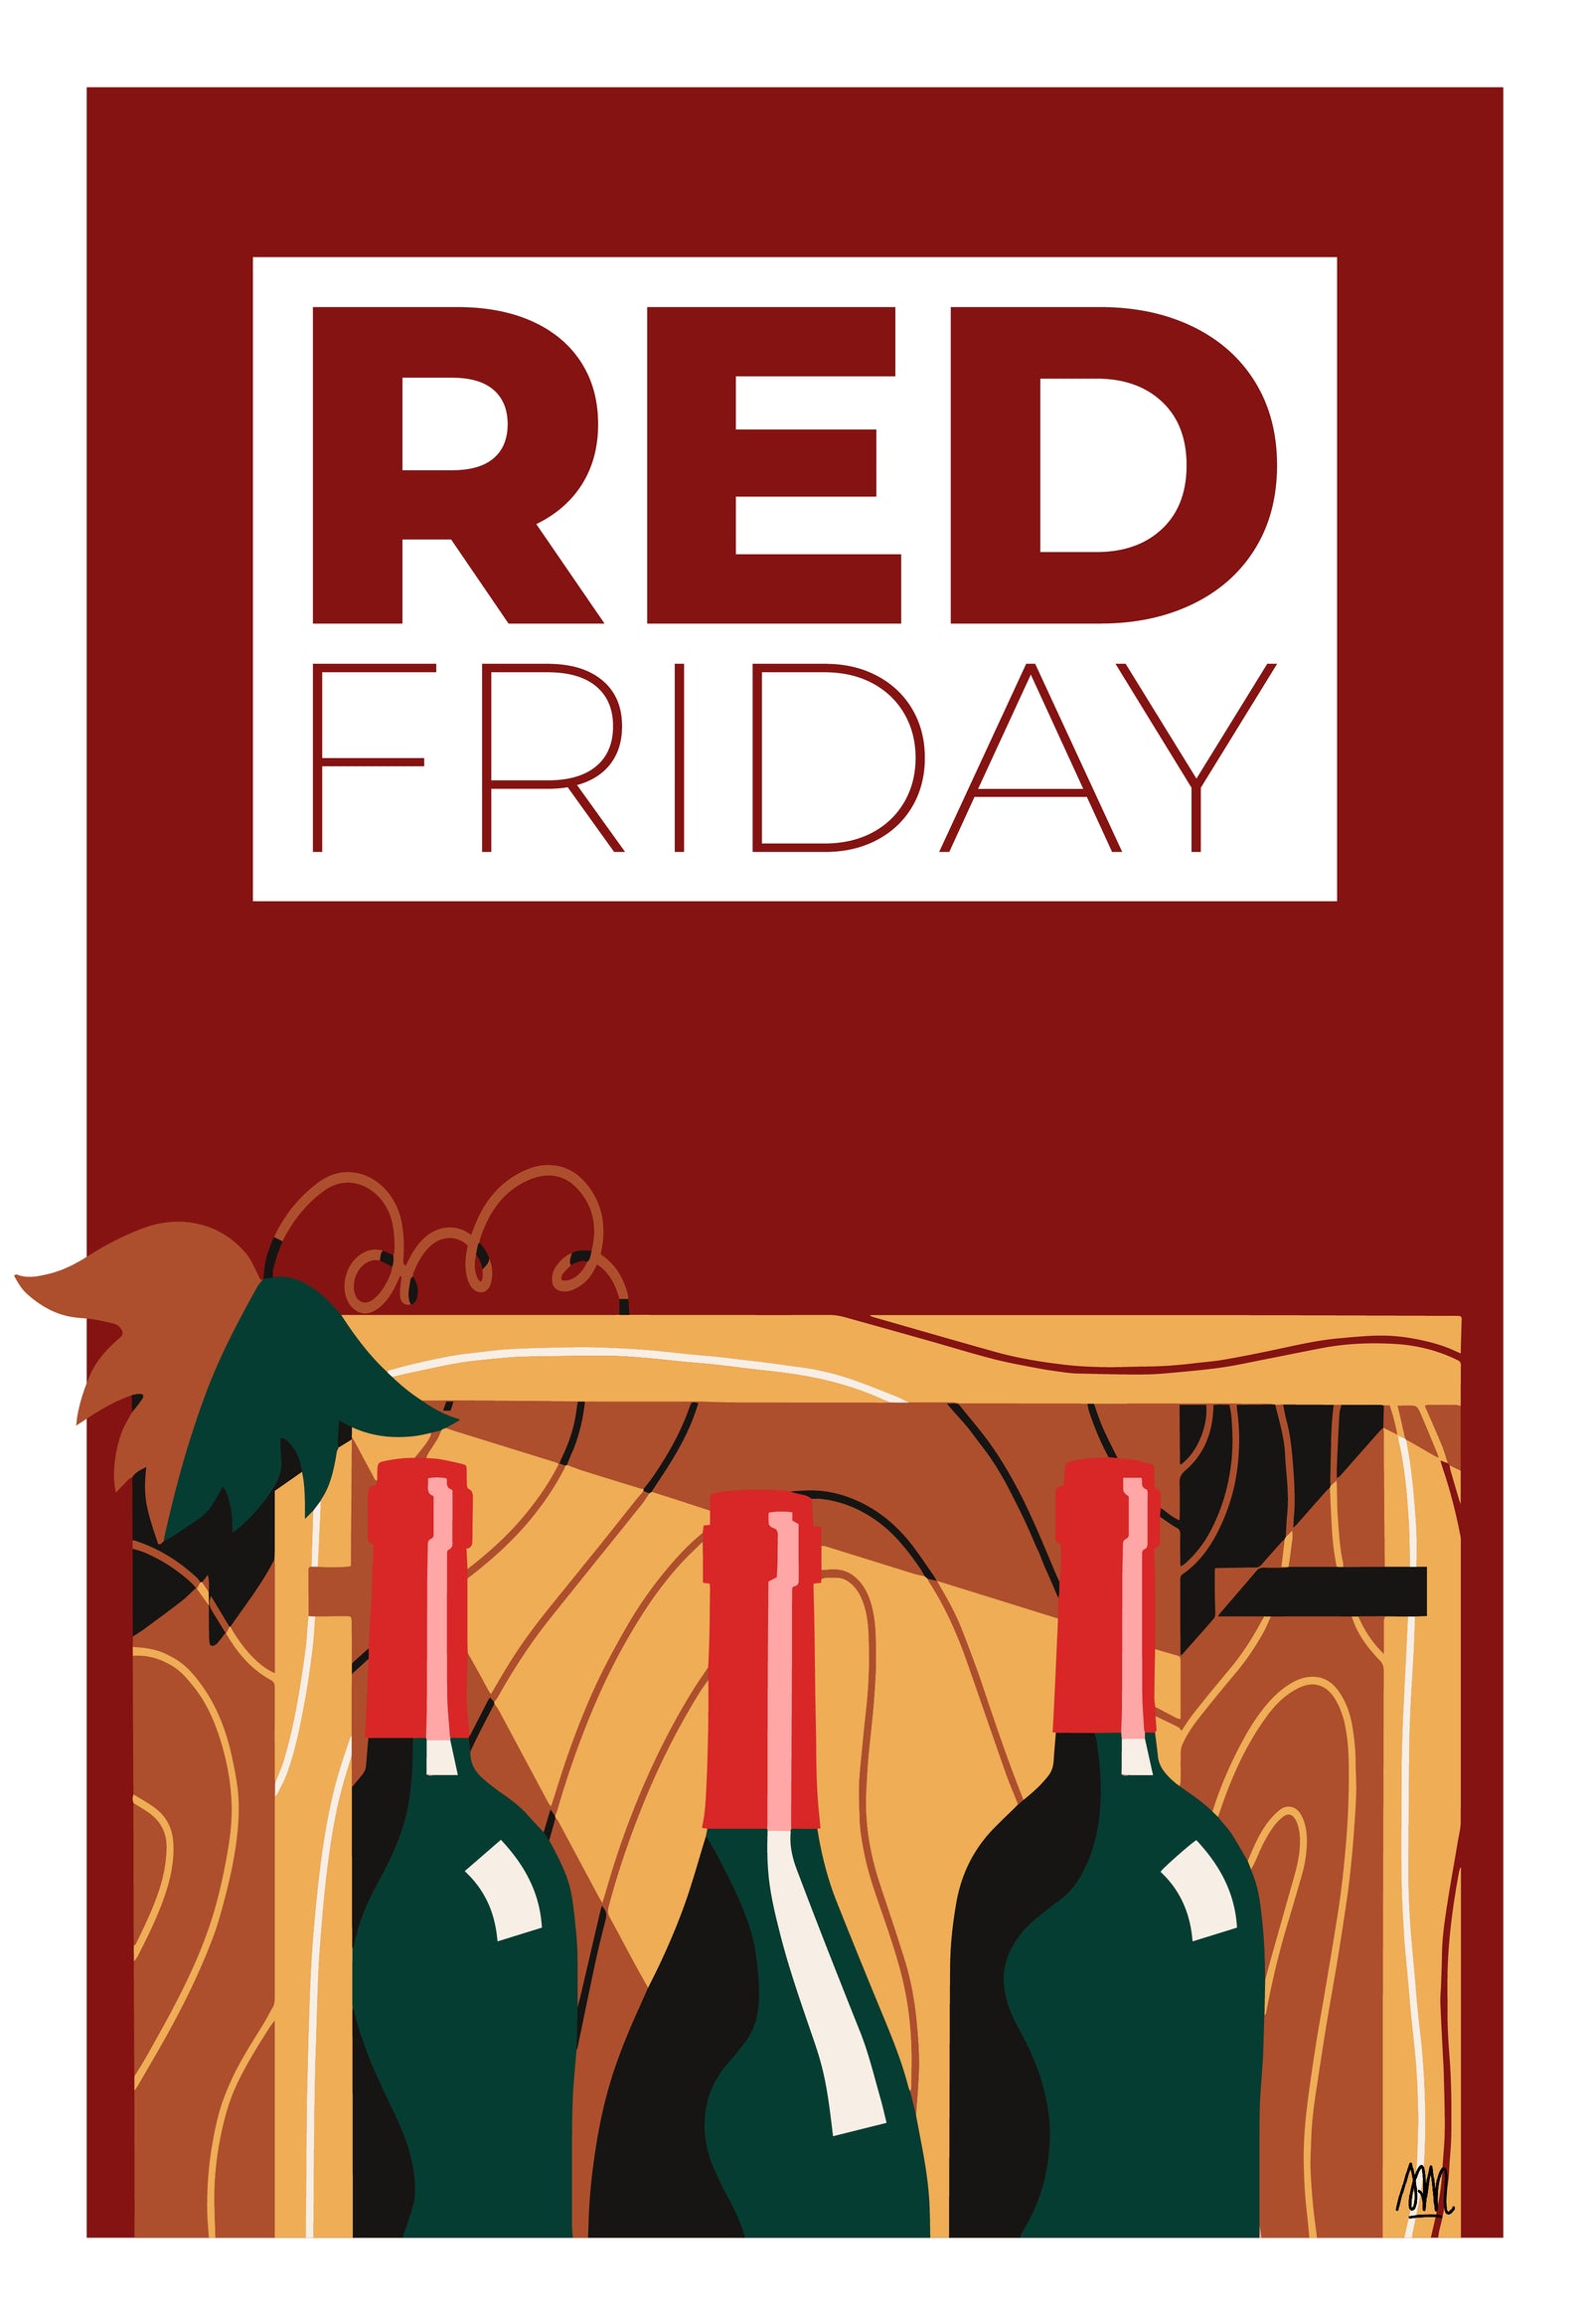 Red Friday Blackfriday coffret vin rouge gérard bertrand